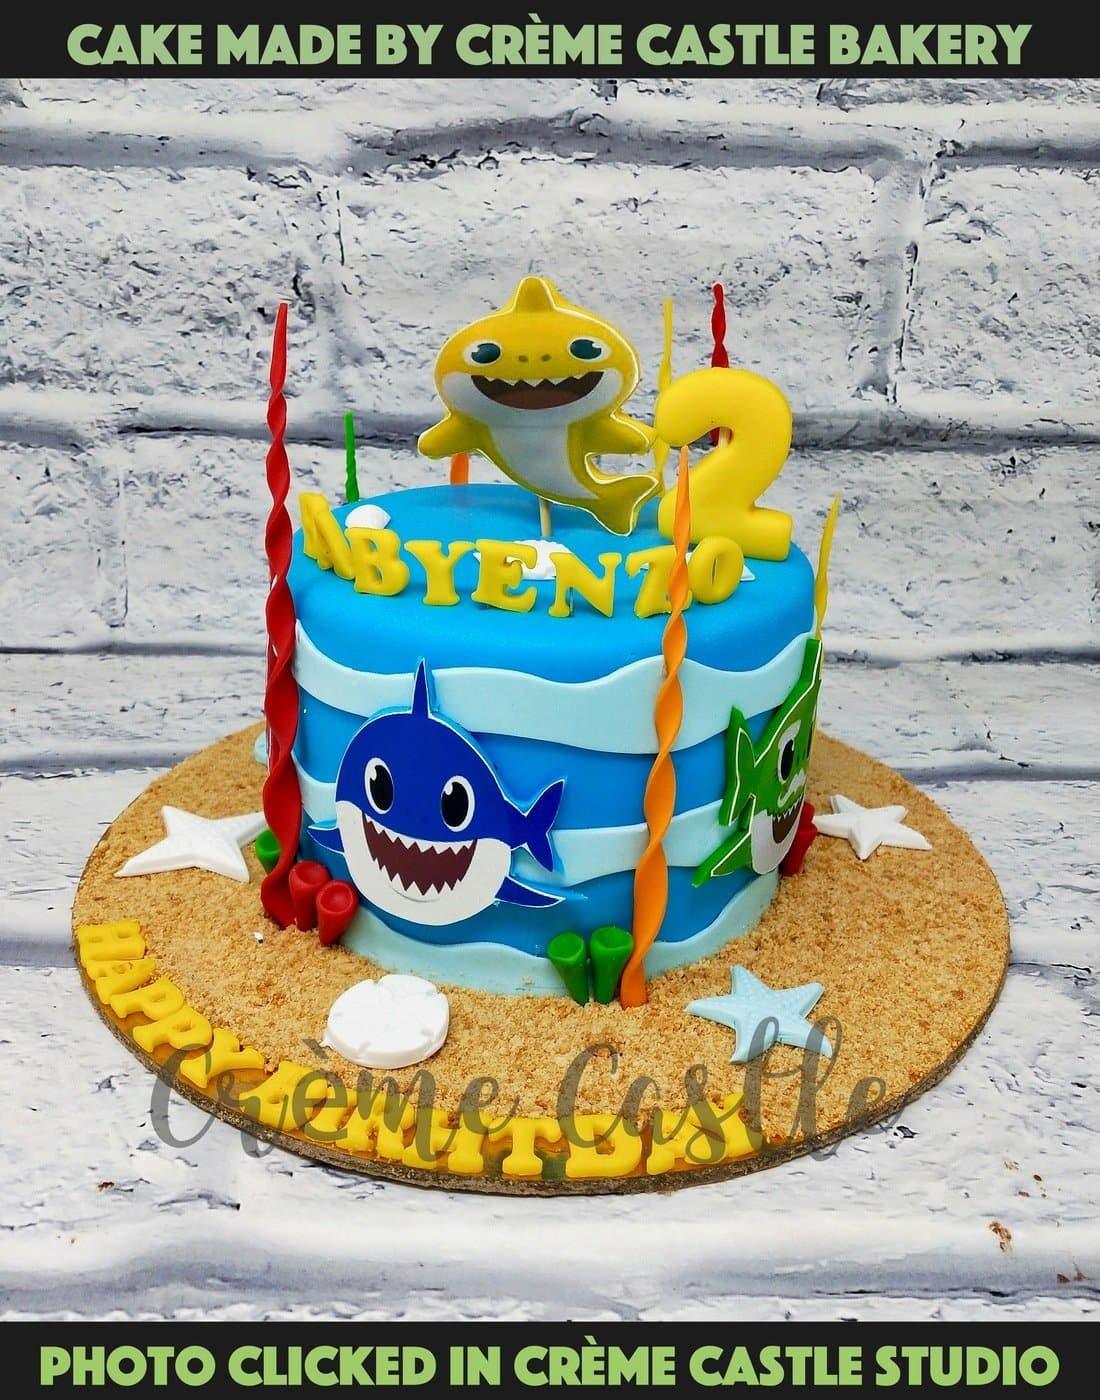 Shark Creations DecoSet® Stacked Cake Design | DecoPac